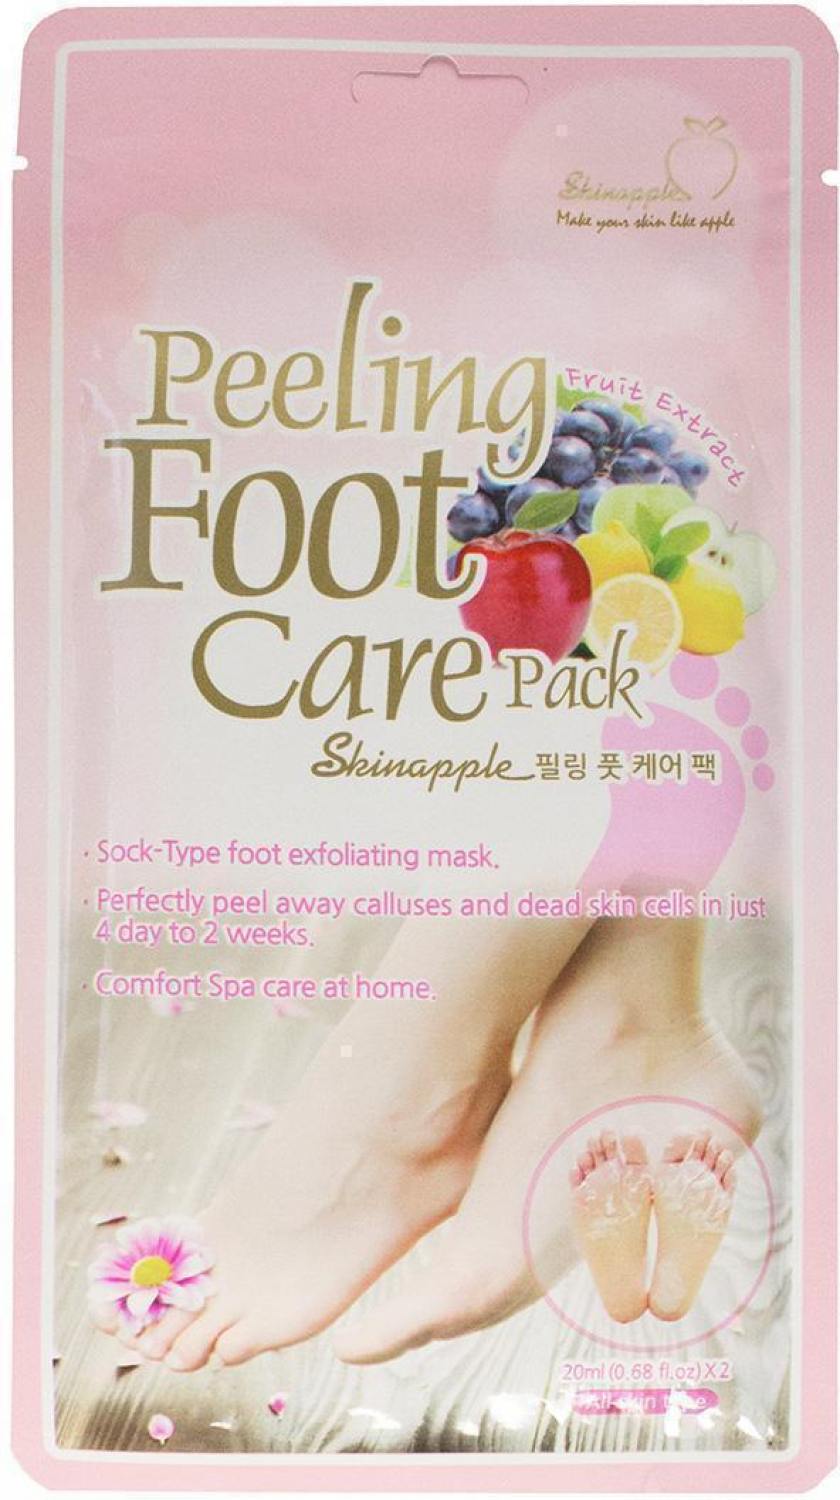 Пилинговые носочки для ног Peeling Foot Care Pack skinapple. Артикул 081400002